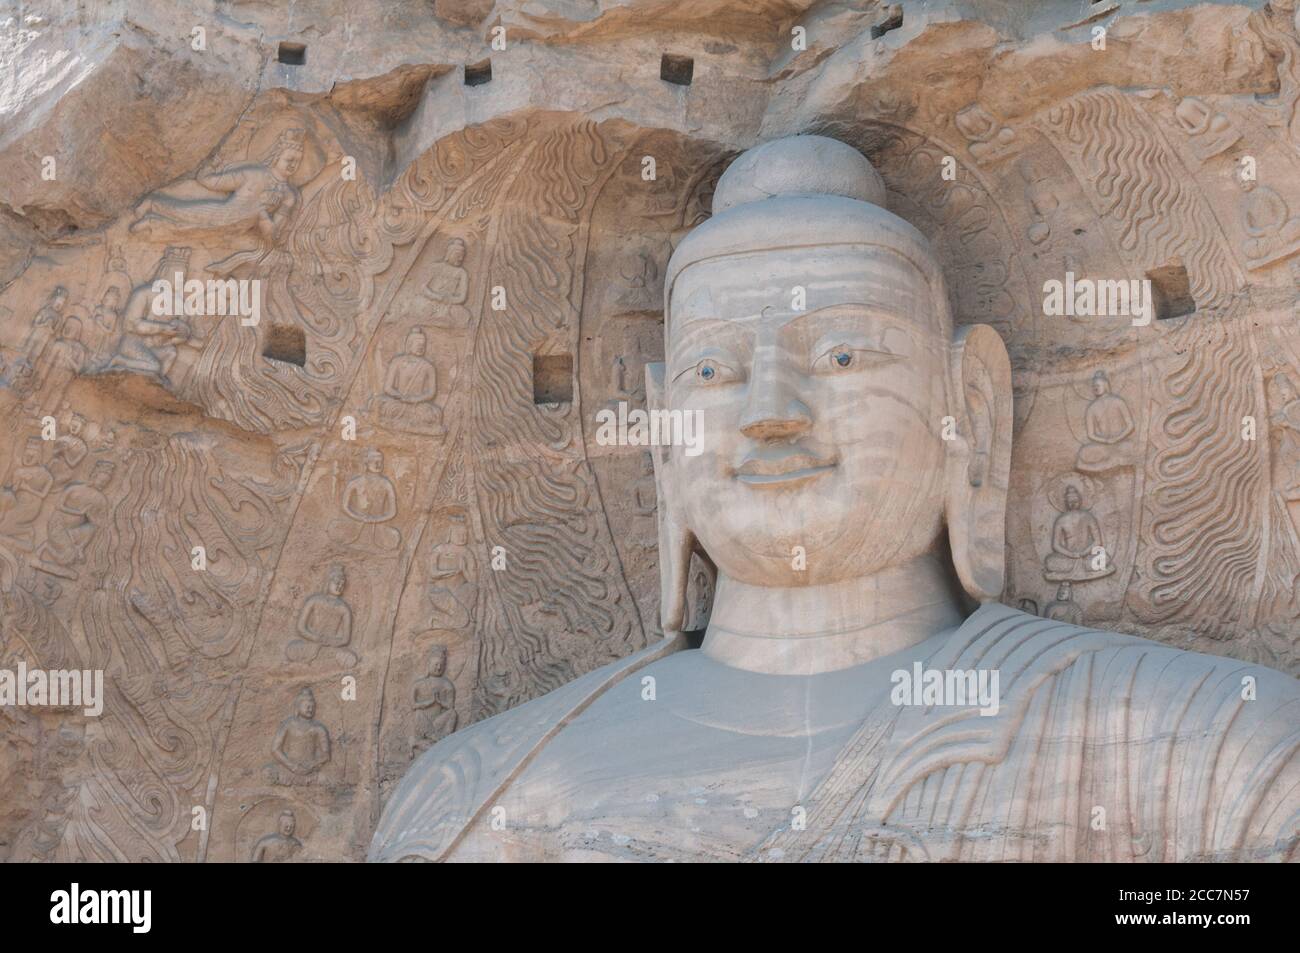 Datong Buddha monument in cave, China  Stock Photo